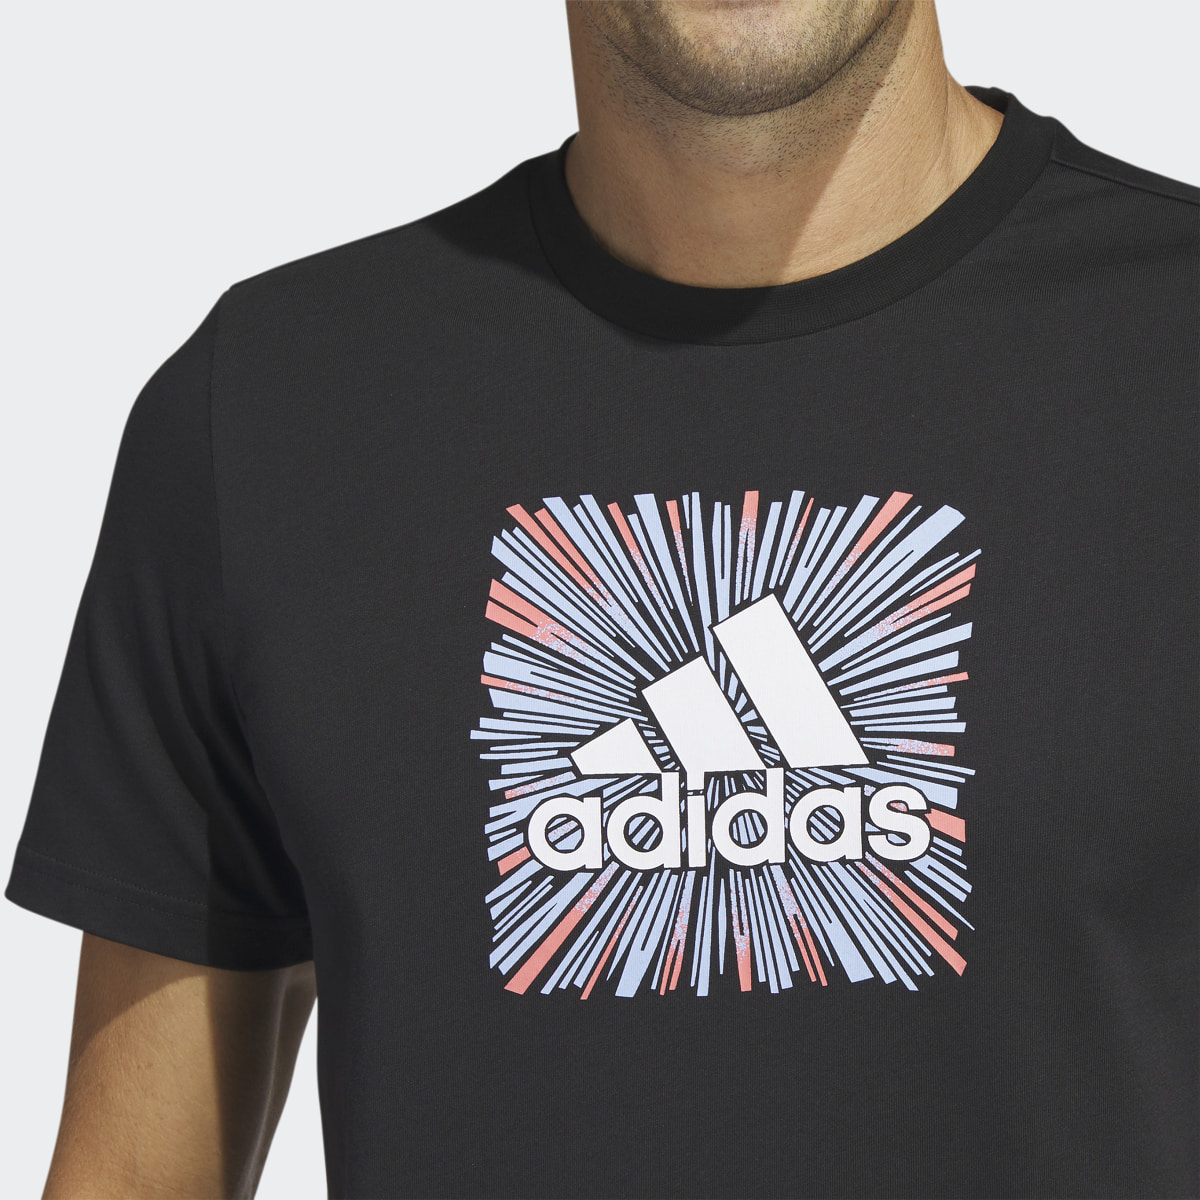 Adidas Sport Optimist Sun Logo Sportswear Graphic T-Shirt (Short Sleeve). 6